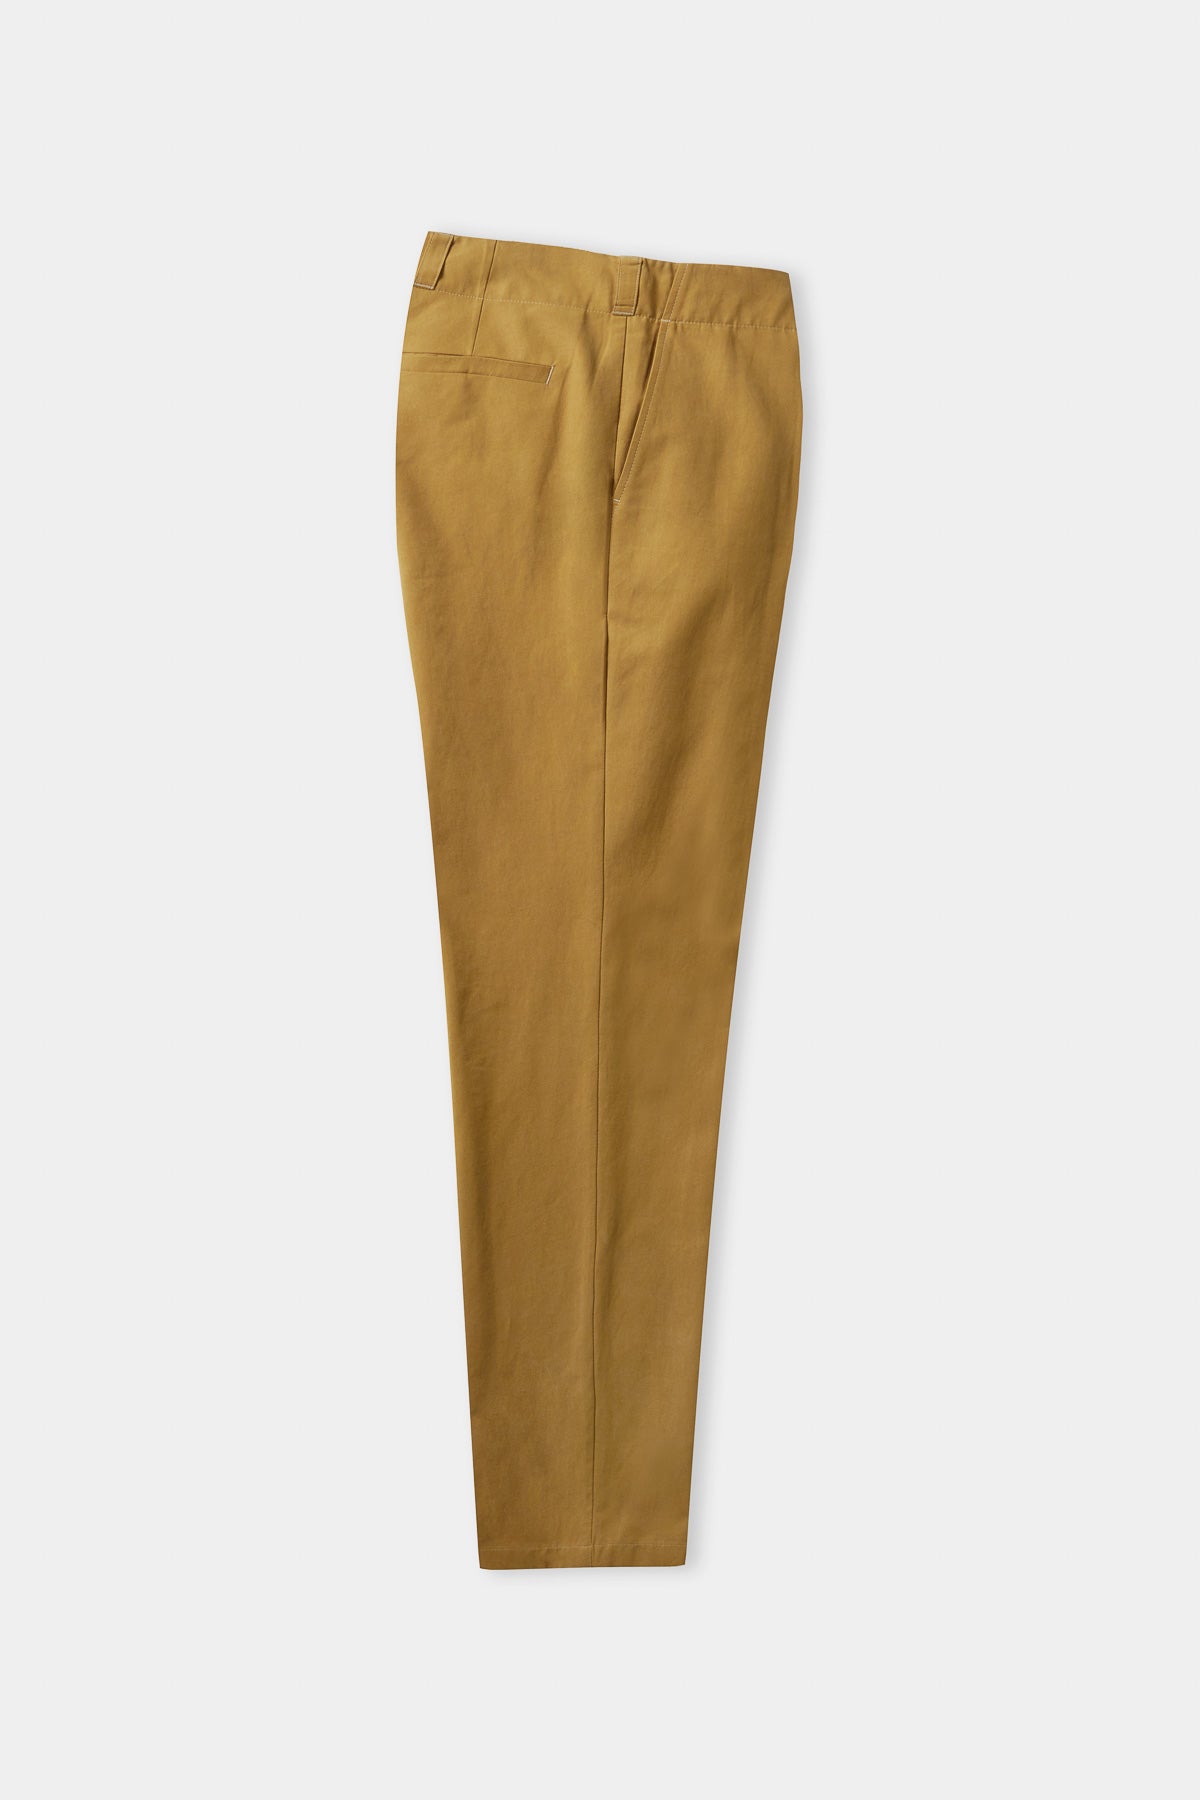 JOSTHA trousers gold tencel